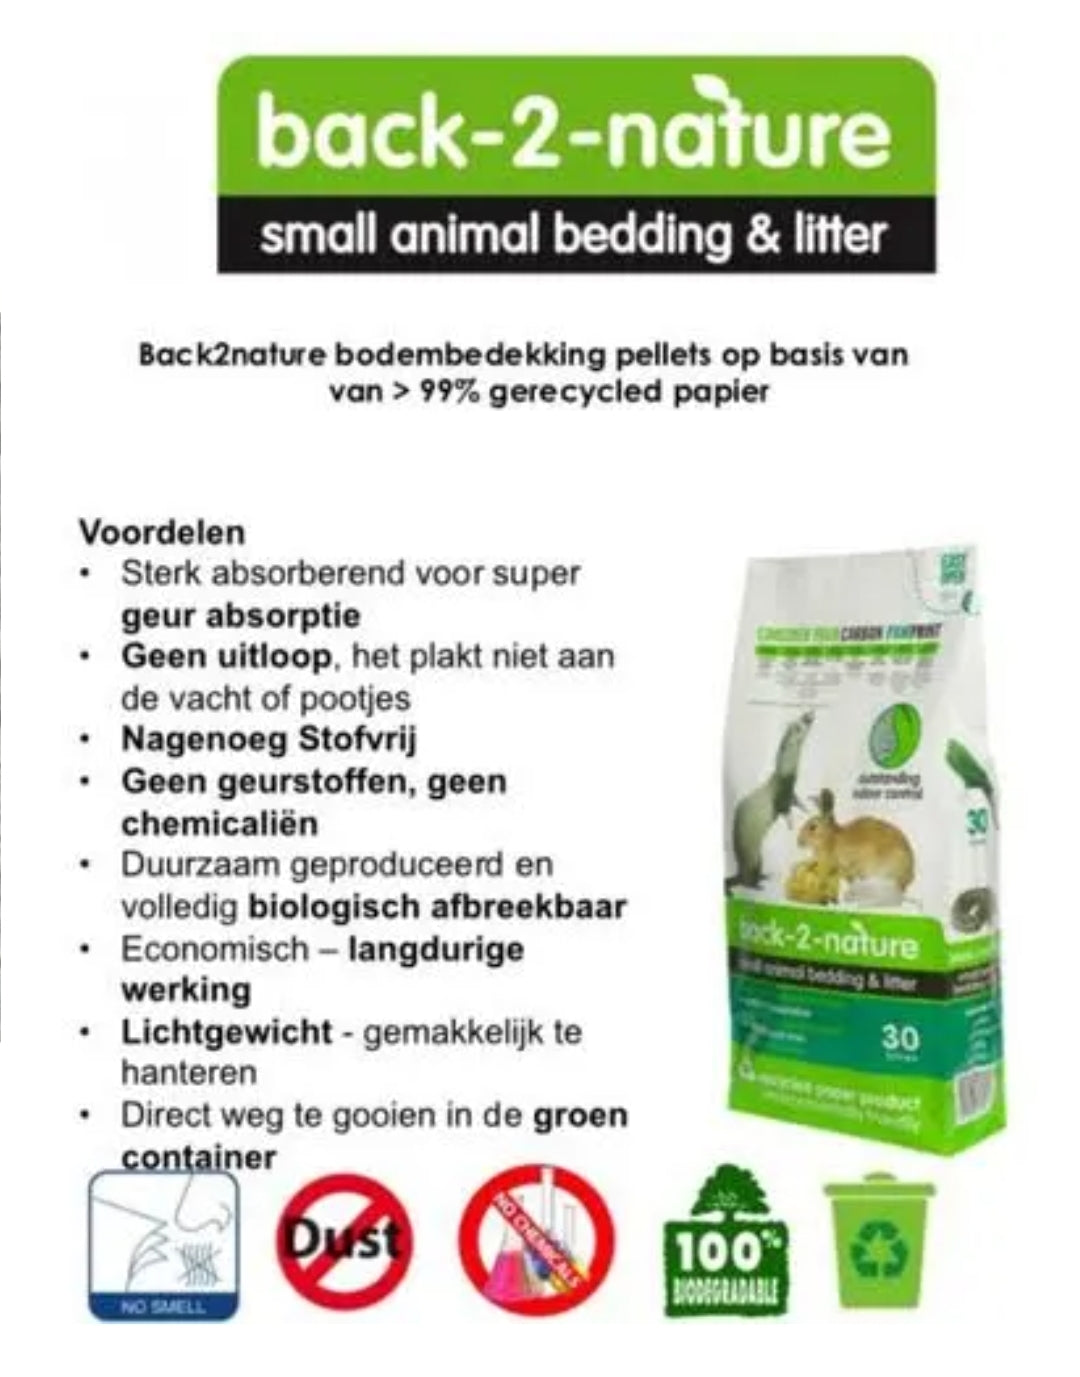 Back-2-Nature Bedding & Litter - Bodembedekking

10L